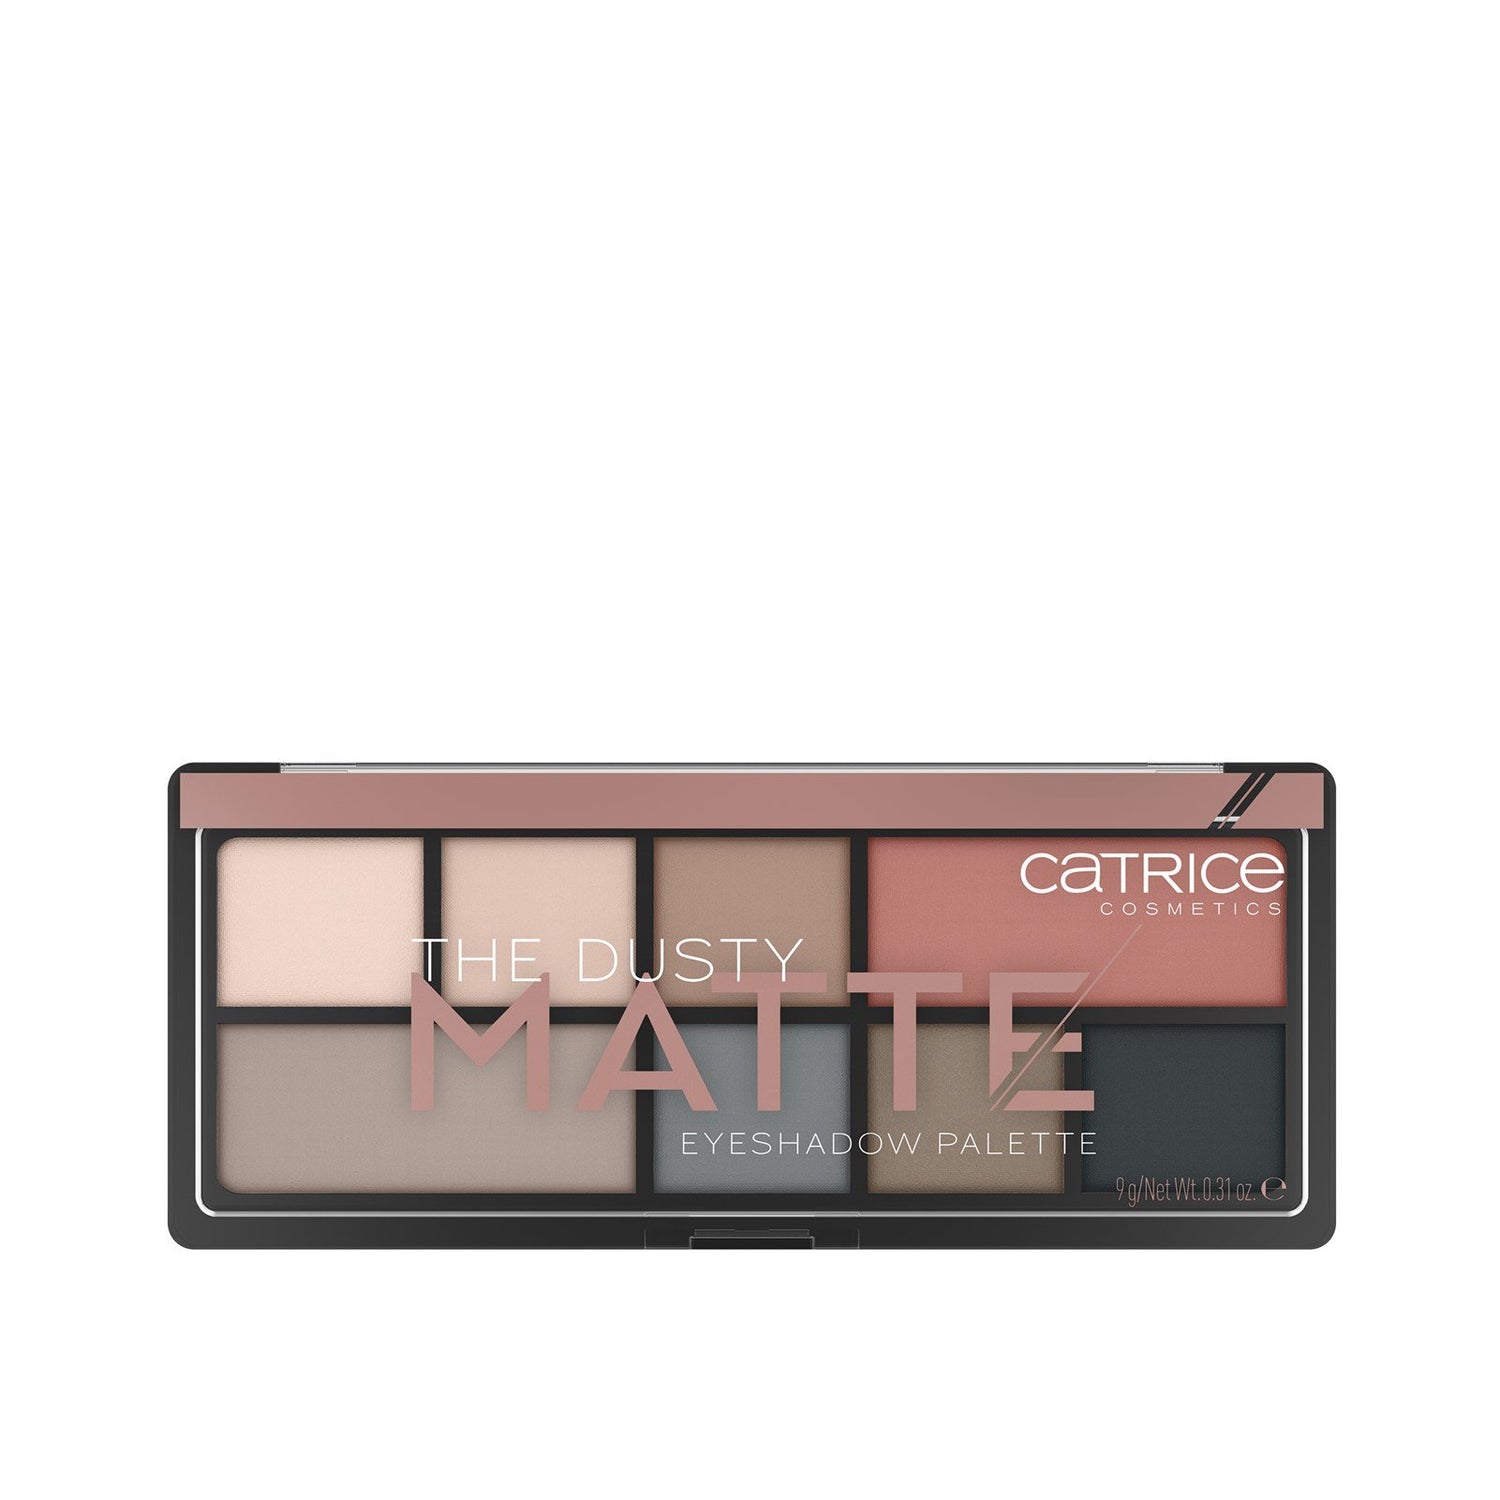 Palette Catrice Eyeshadow (0.31 oz) Matte Cosmetyque The – 9g Dusty